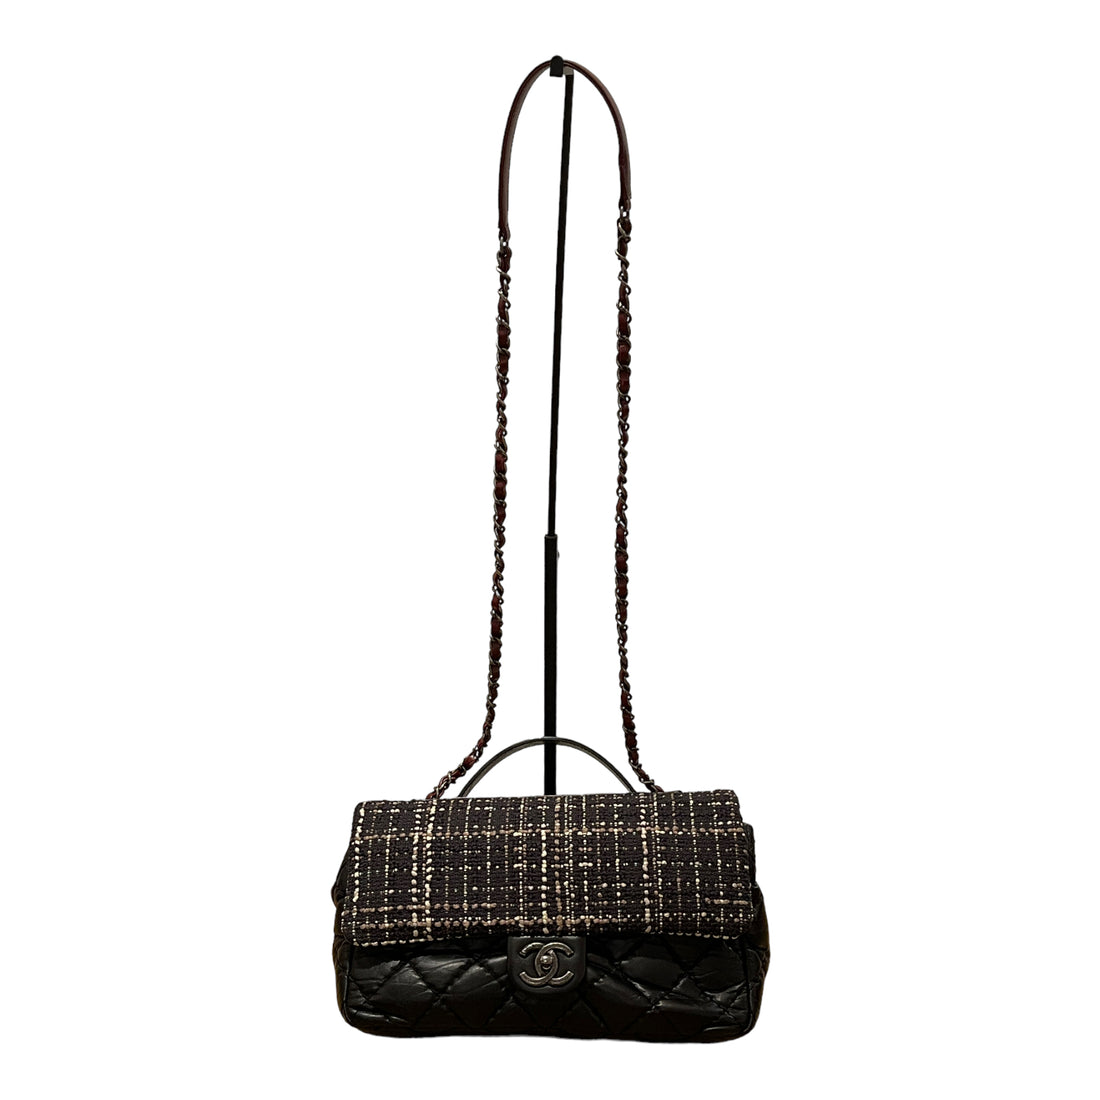 Chanel medium flap bag with tweed flap